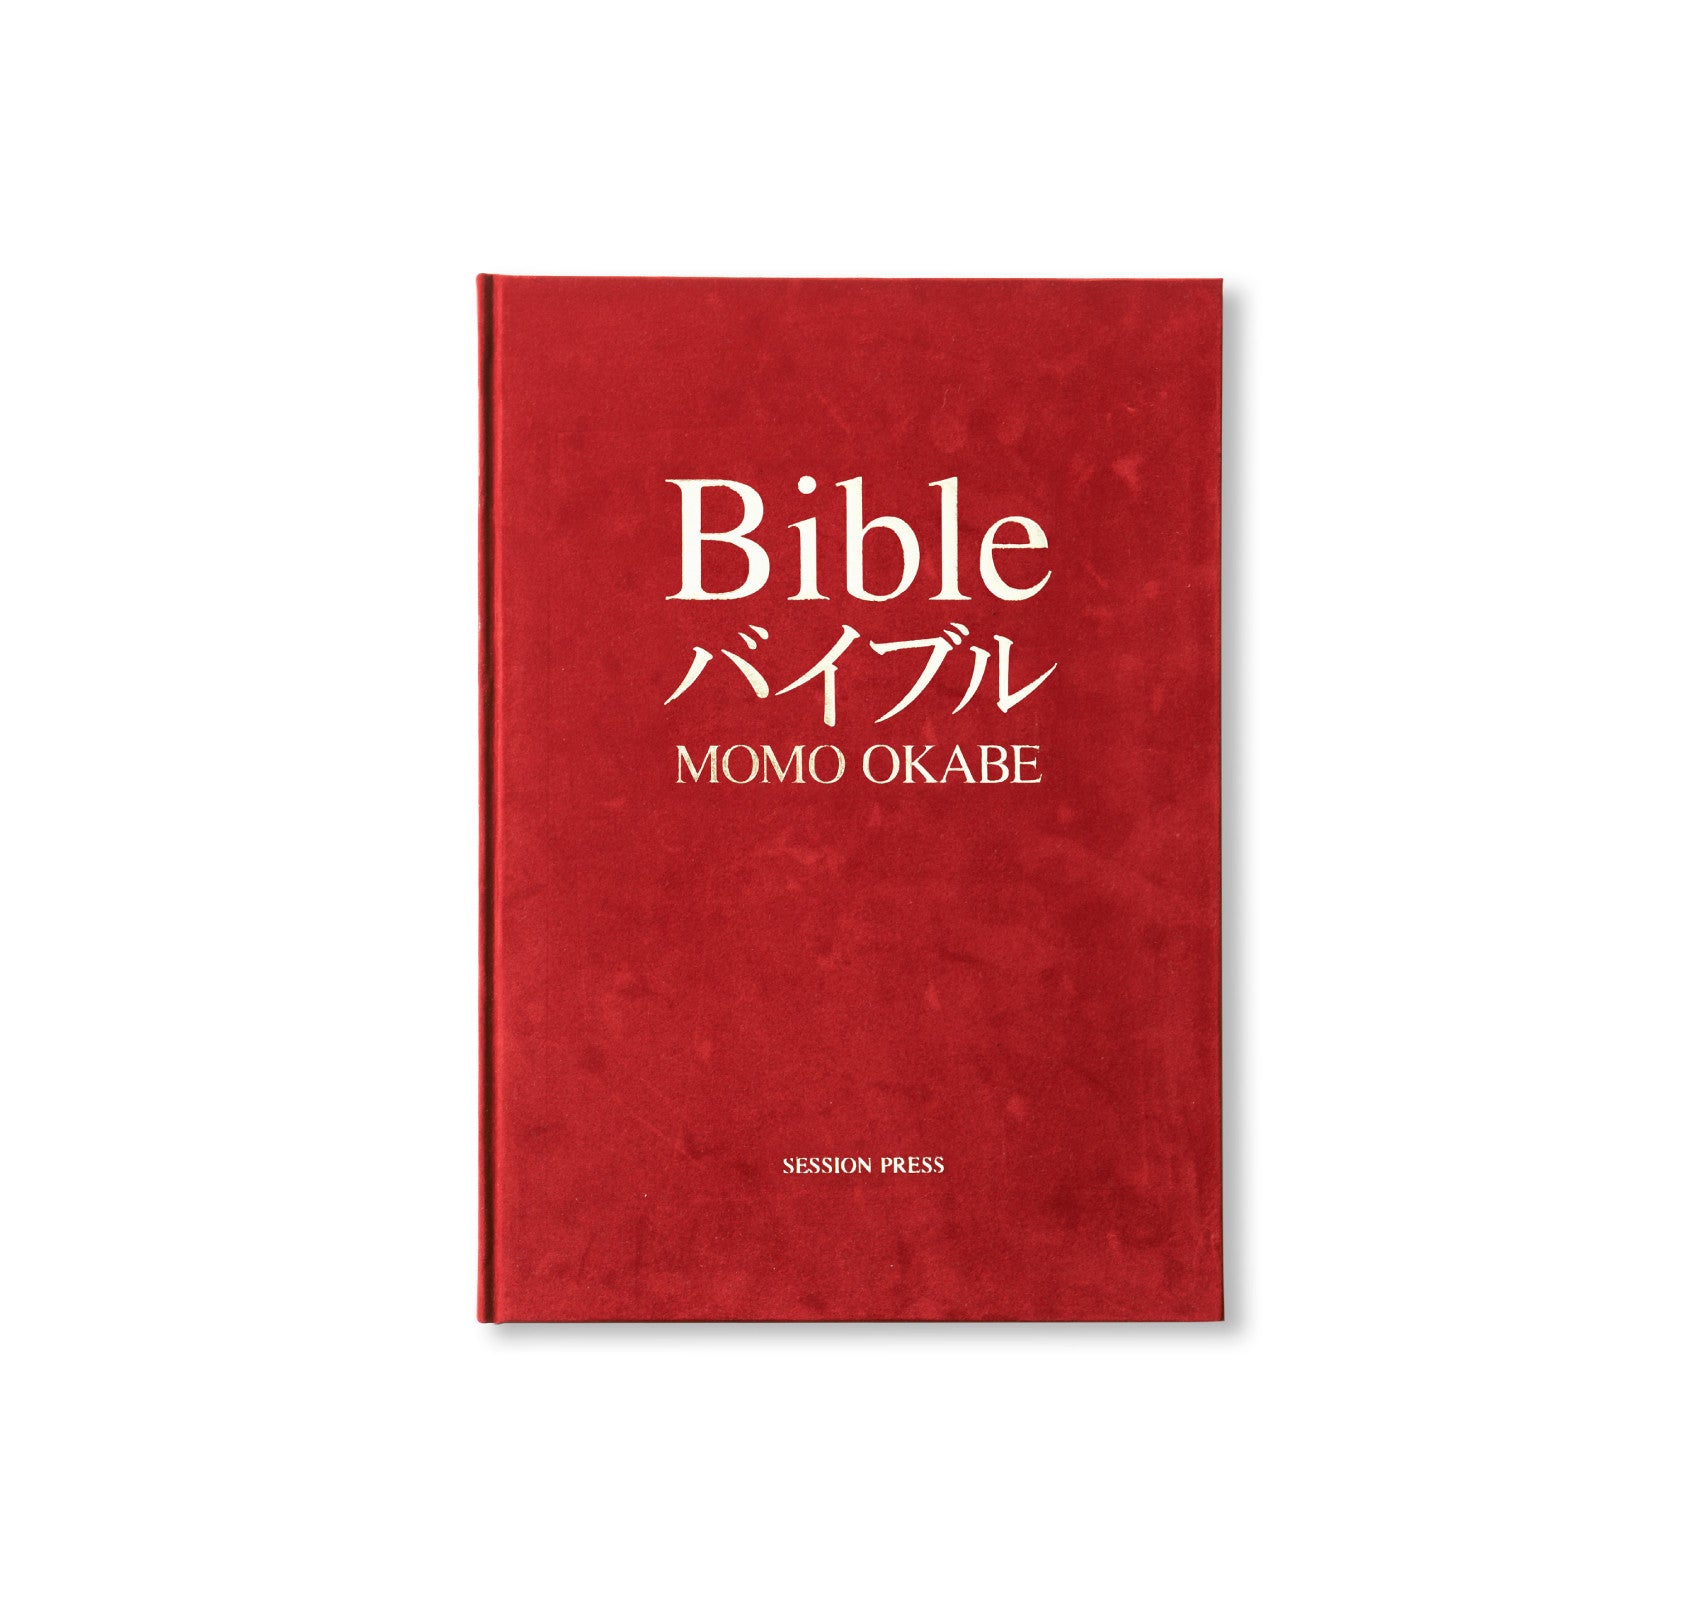 BIBLE by Momo Okabe